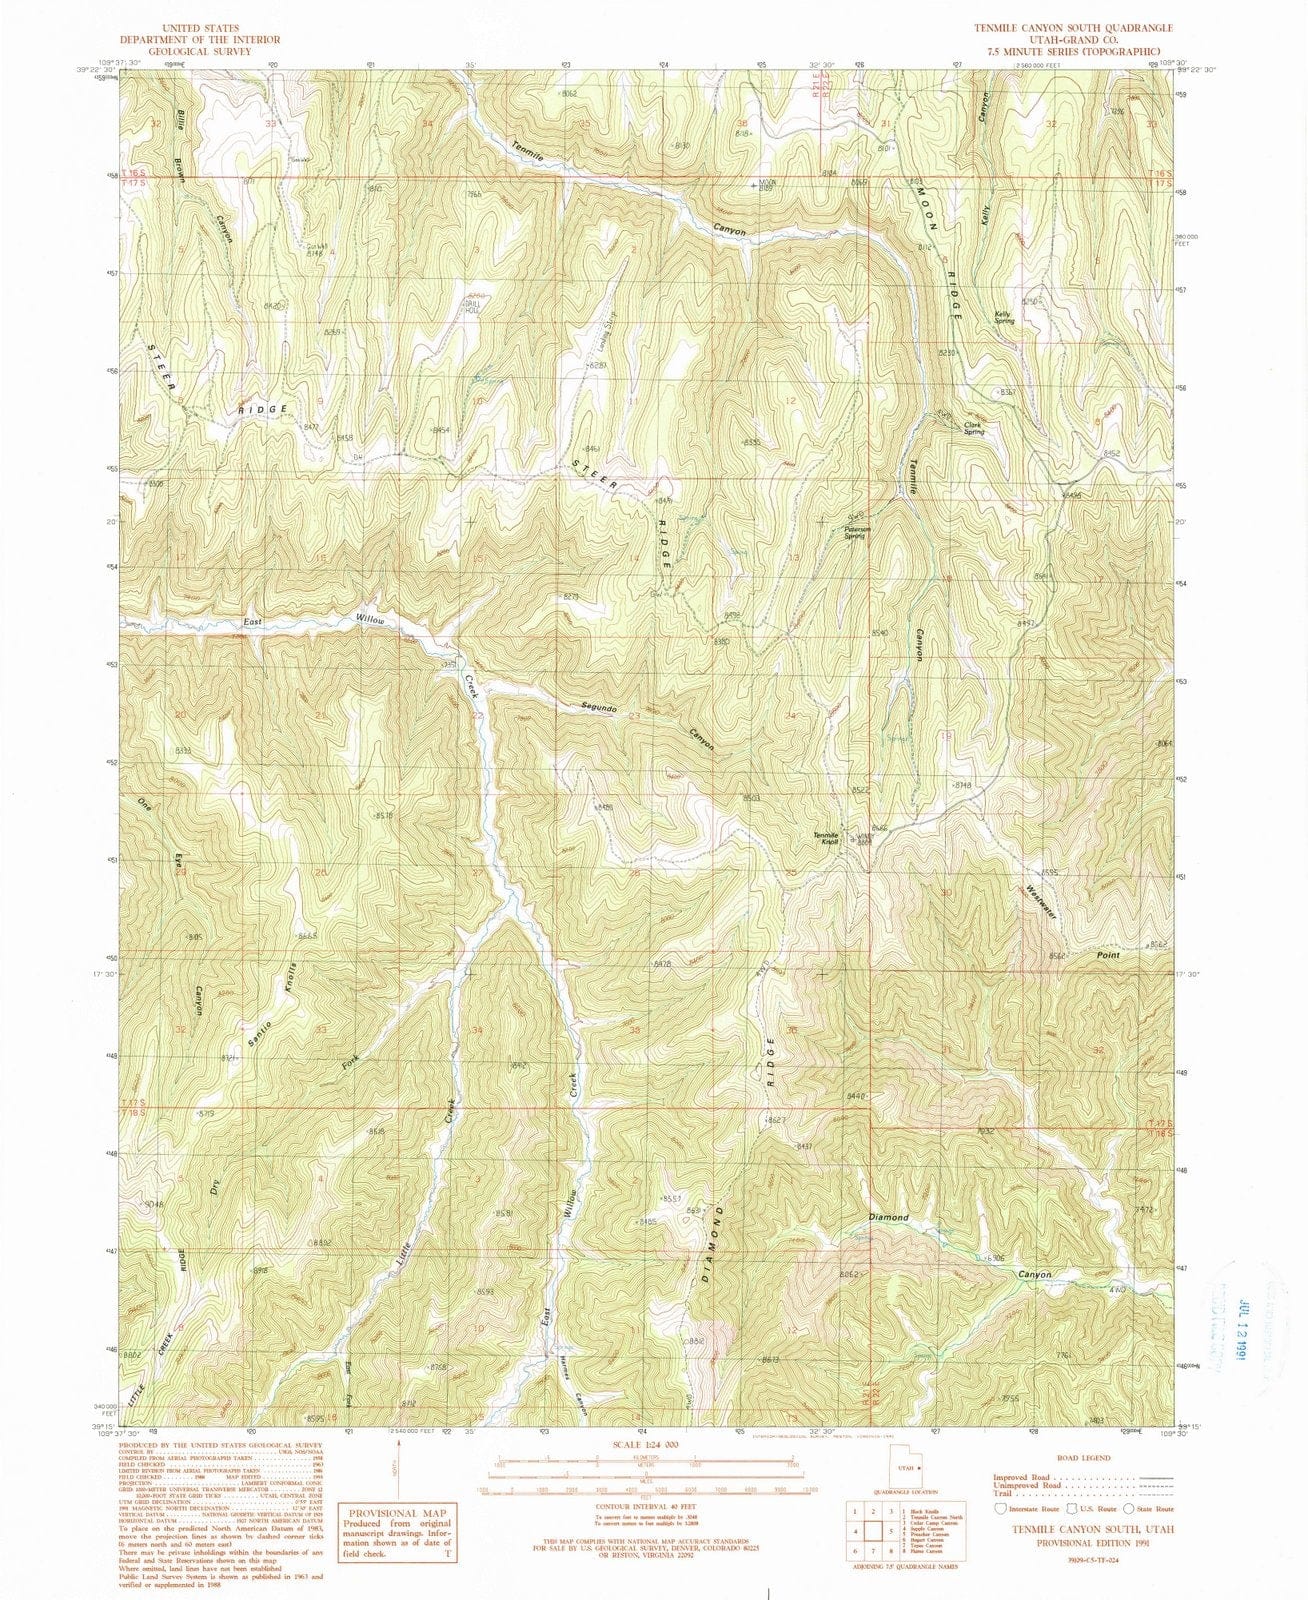 1991 Tenmile Canyon South, UT - Utah - USGS Topographic Map